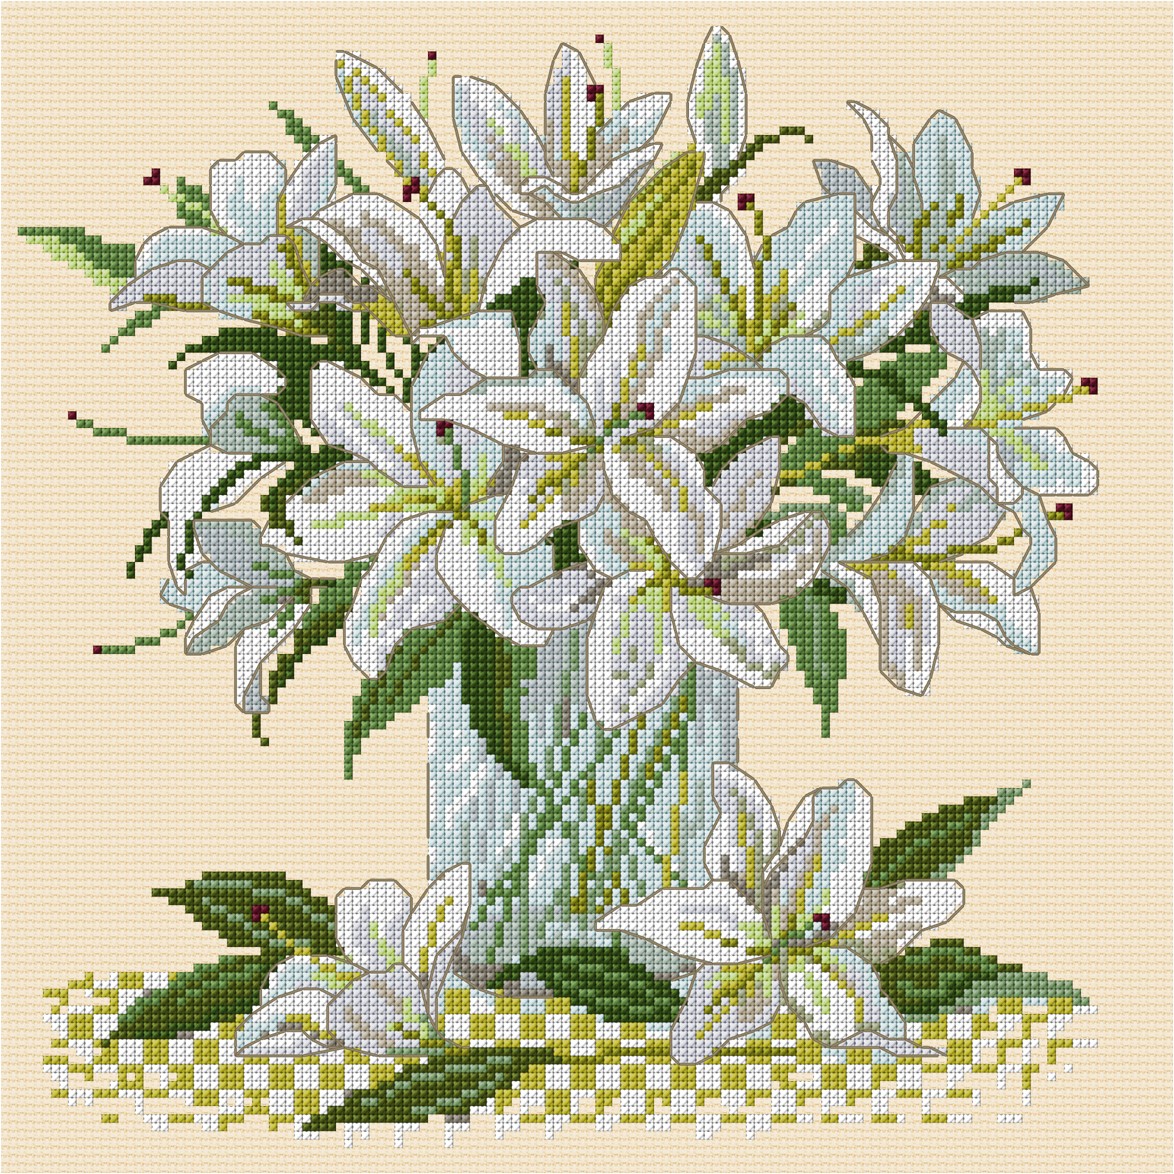 LJT142 White lilies illustration 6125